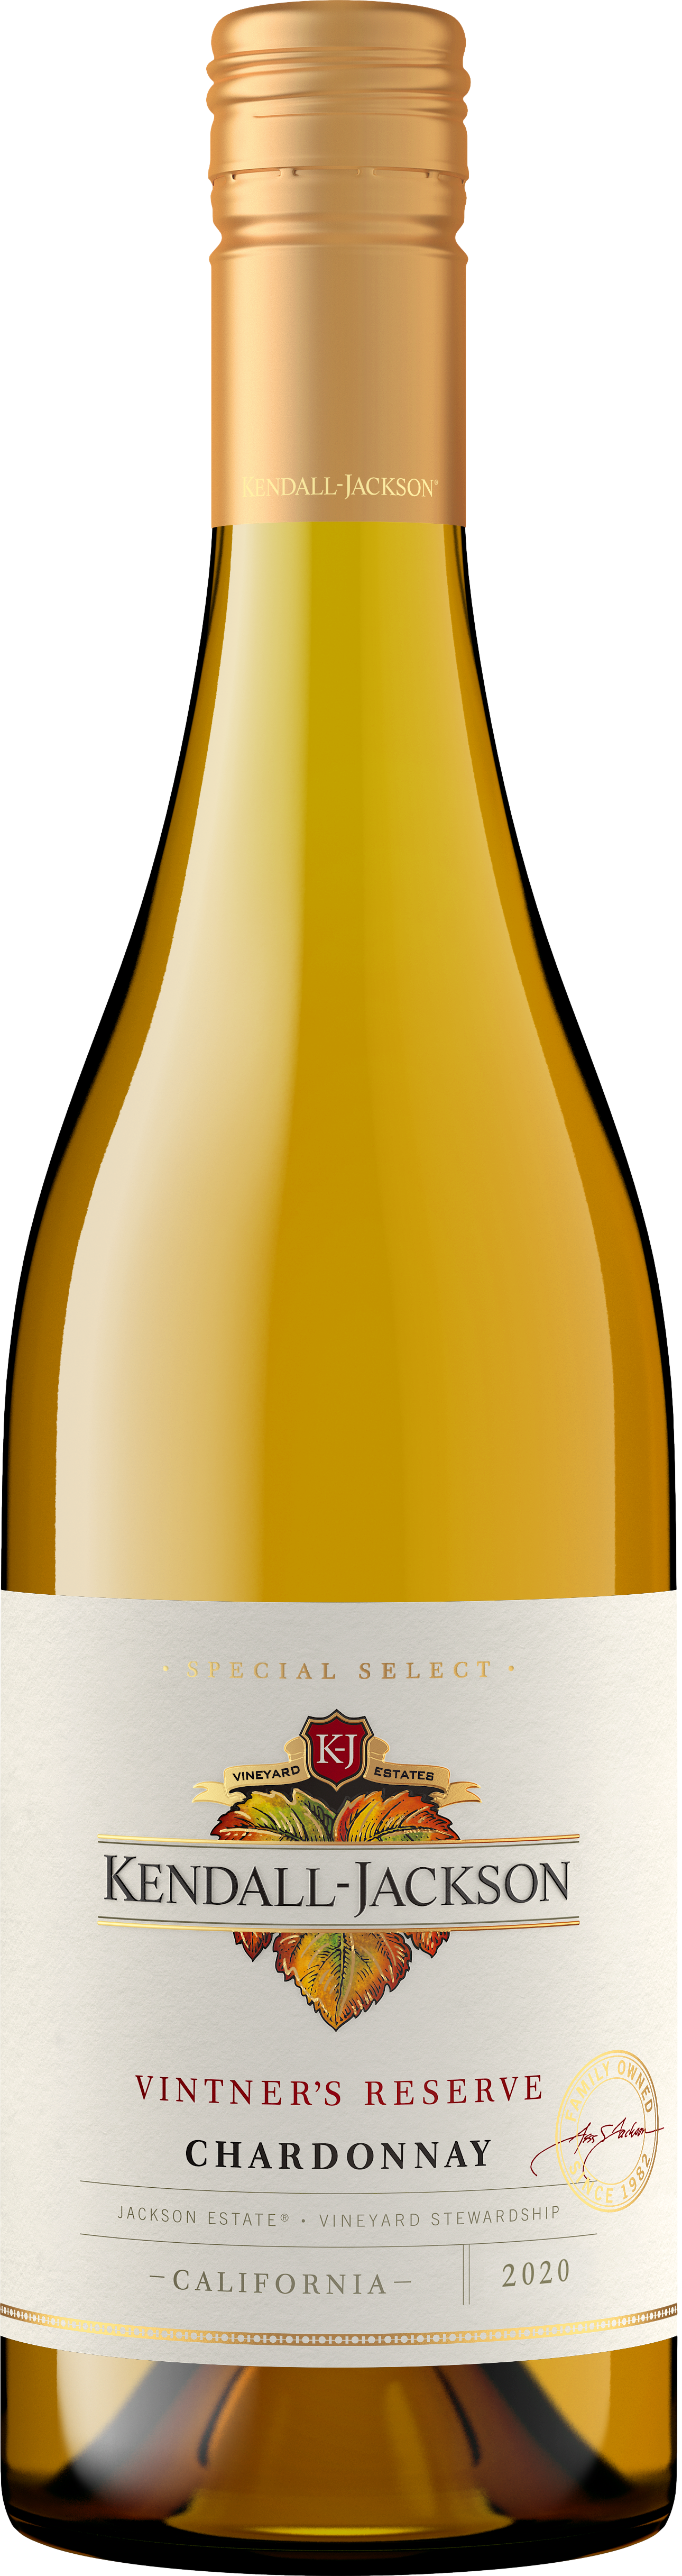 Kendall-Jackson Vintner%27s Reserve Chardonnay 2020 Kendall-Jackson 8wines DACH